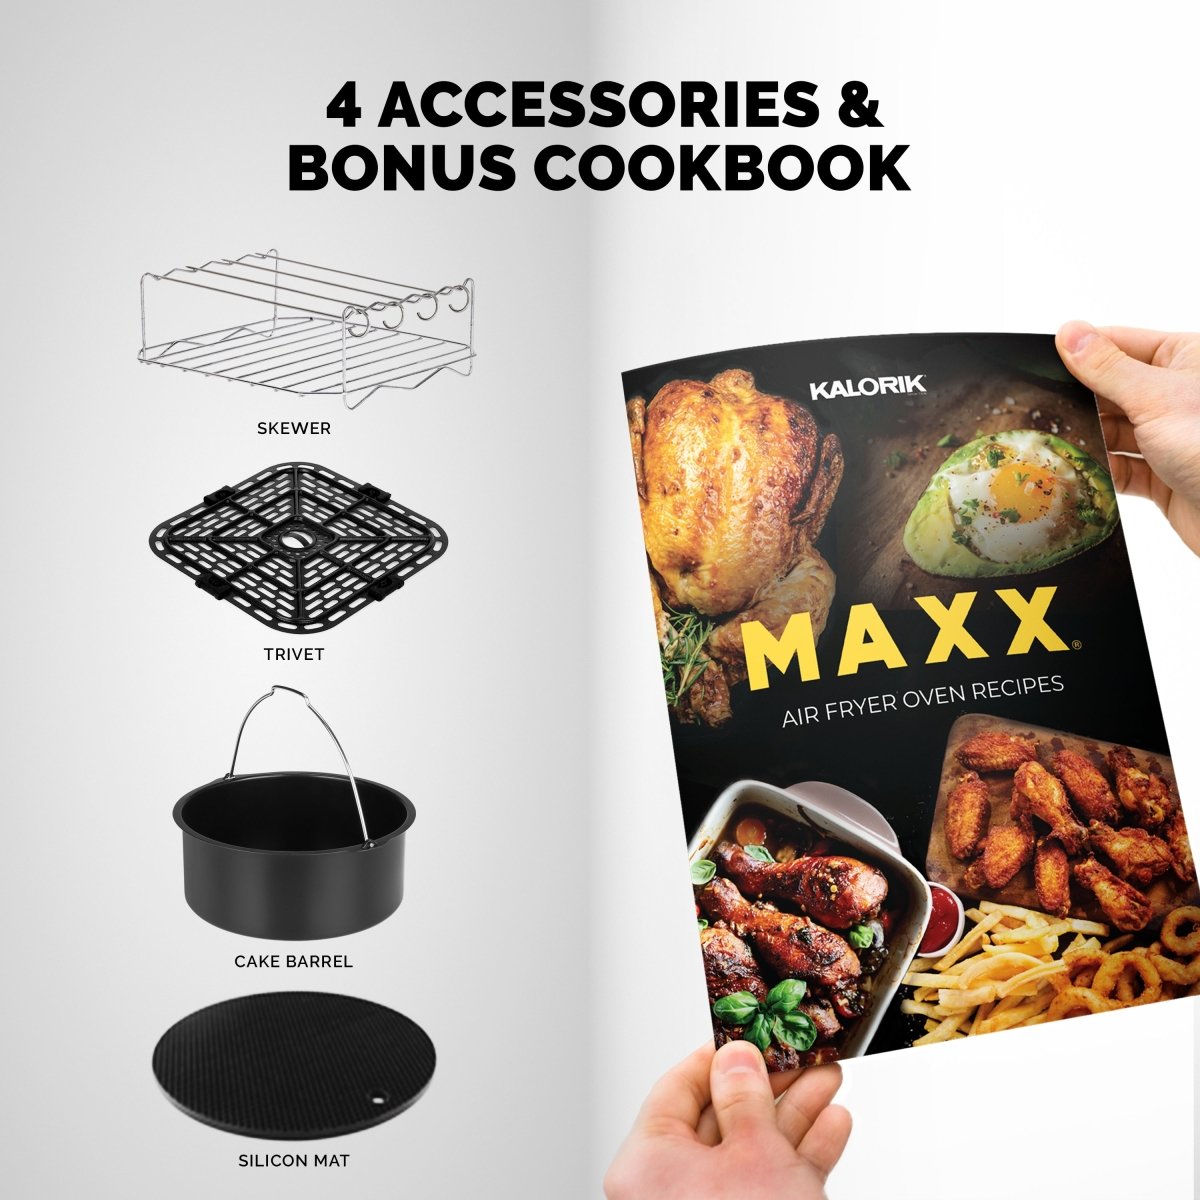 Kalorik MAXX® 4 Quart Digital Air Fryer, Black and Stainless Steel